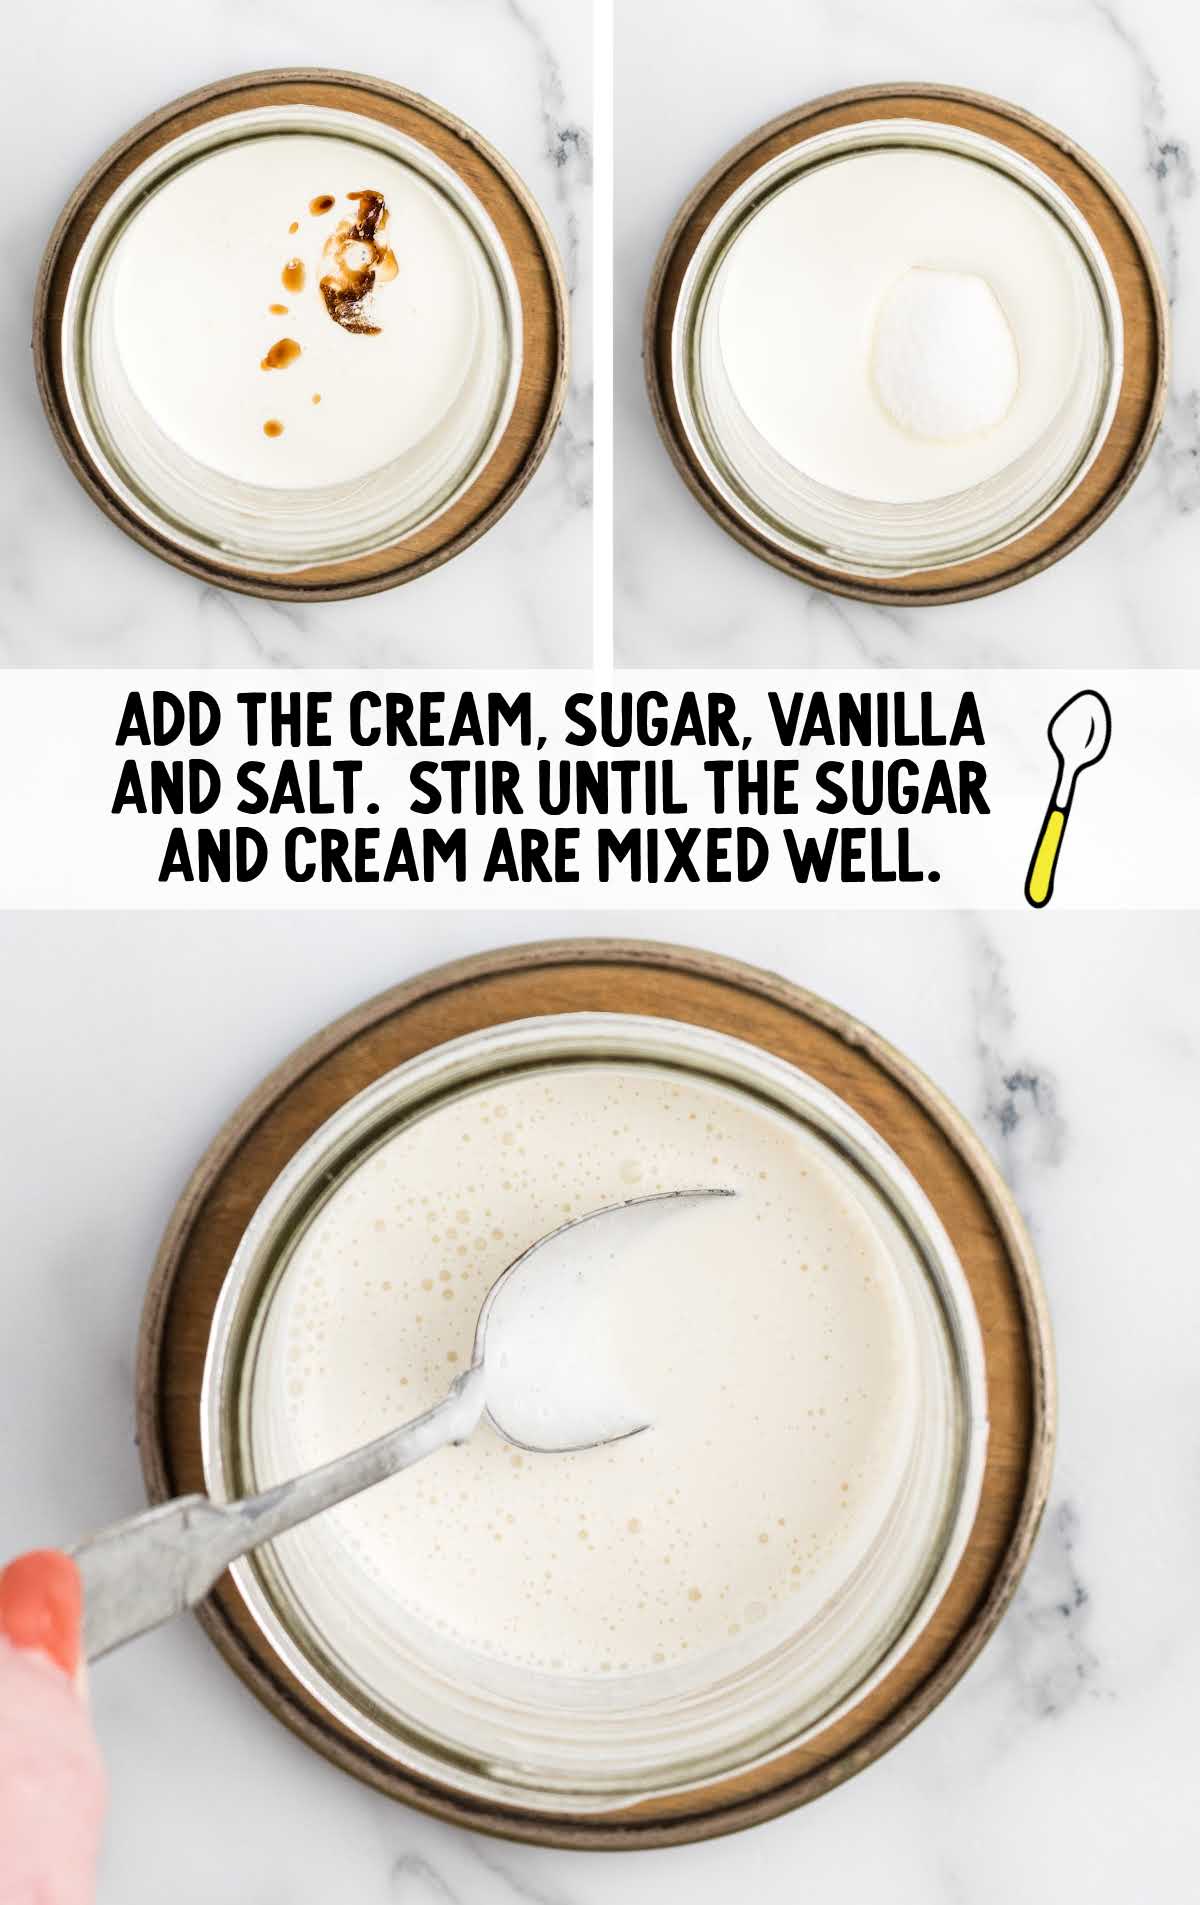 cold heavy cream, granulated sugar, vanilla extract, and table salt added to a Mason jar